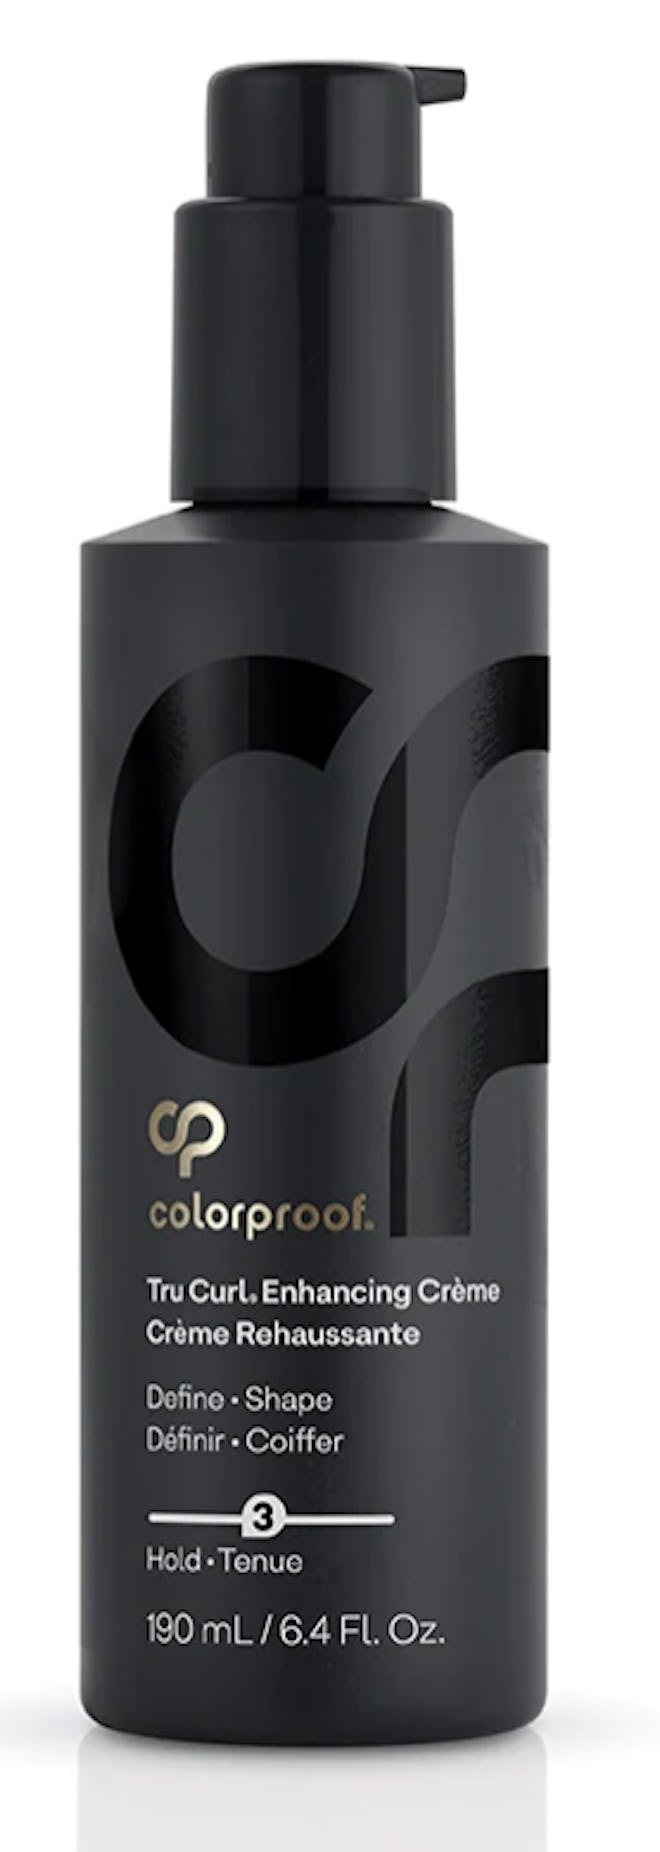 Colorproof Tru Curl Enhancing Creme for curls